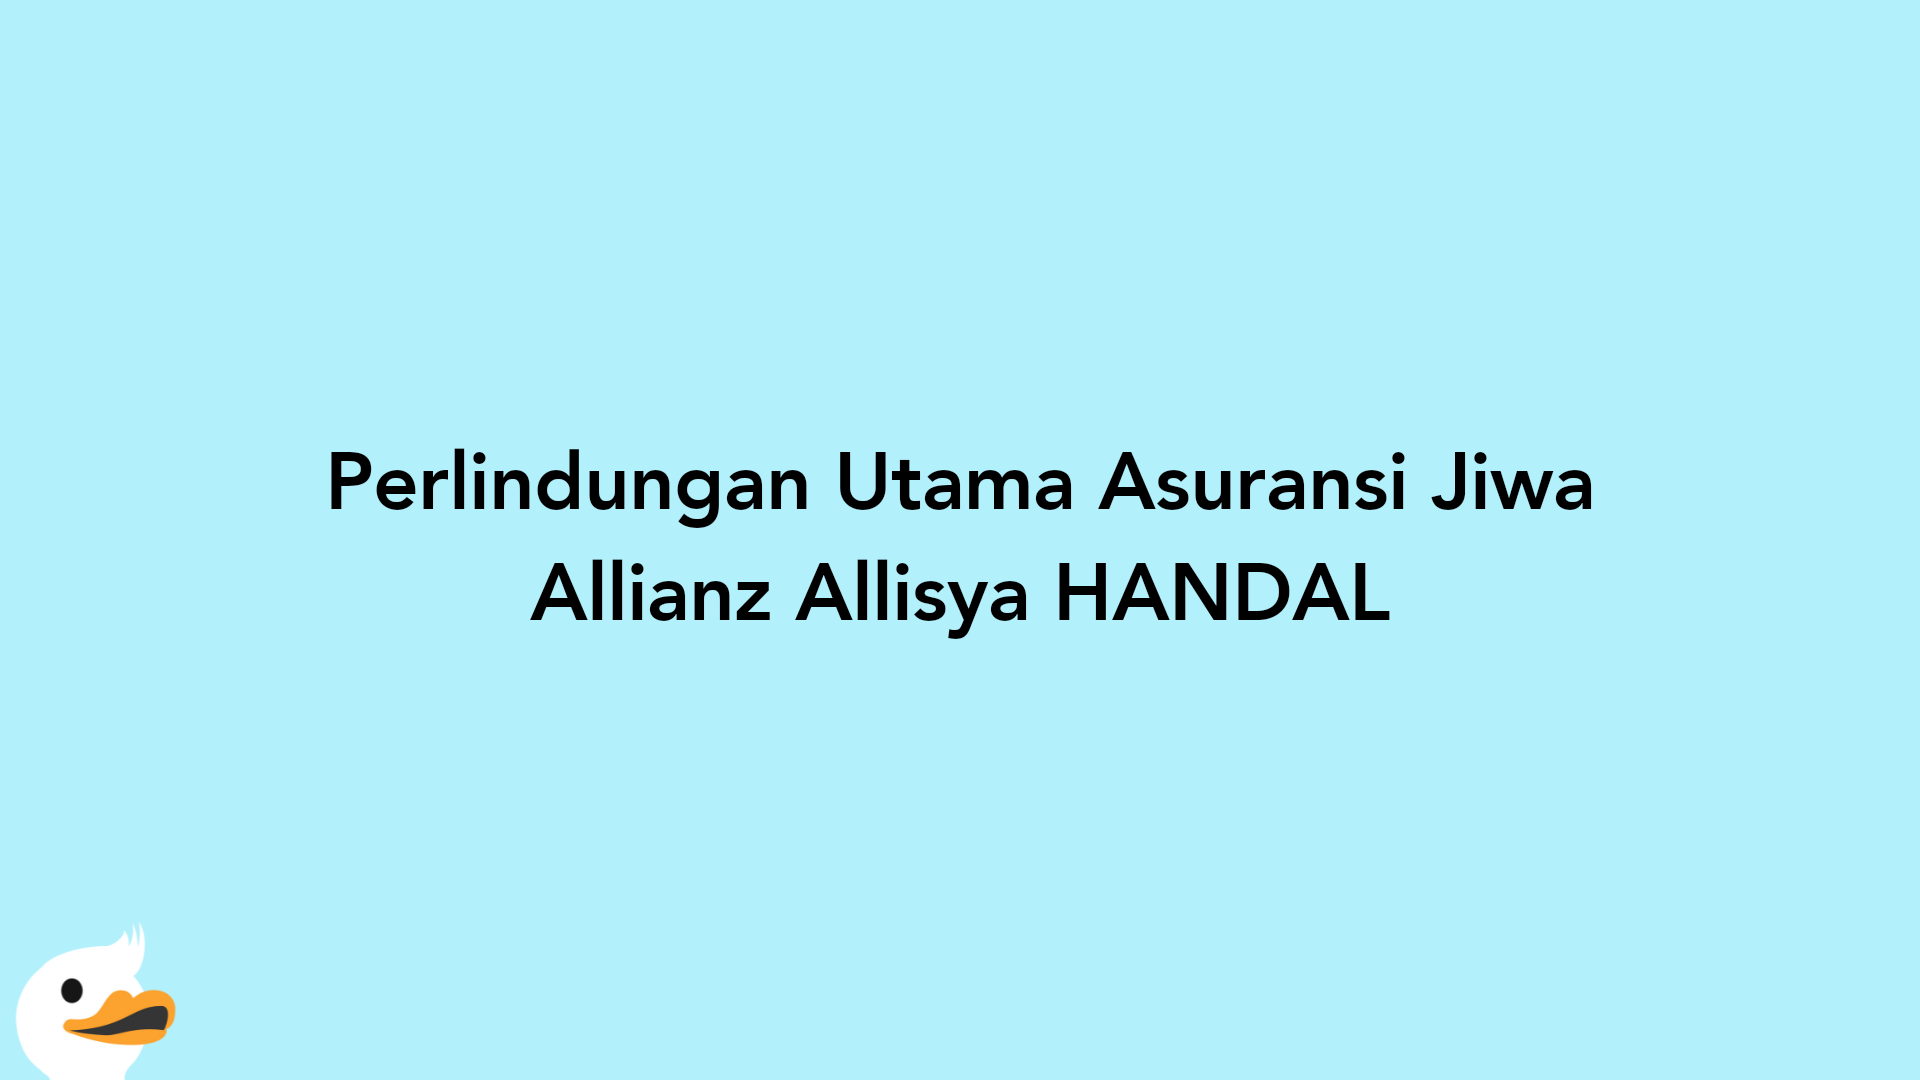 Perlindungan Utama Asuransi Jiwa Allianz Allisya HANDAL